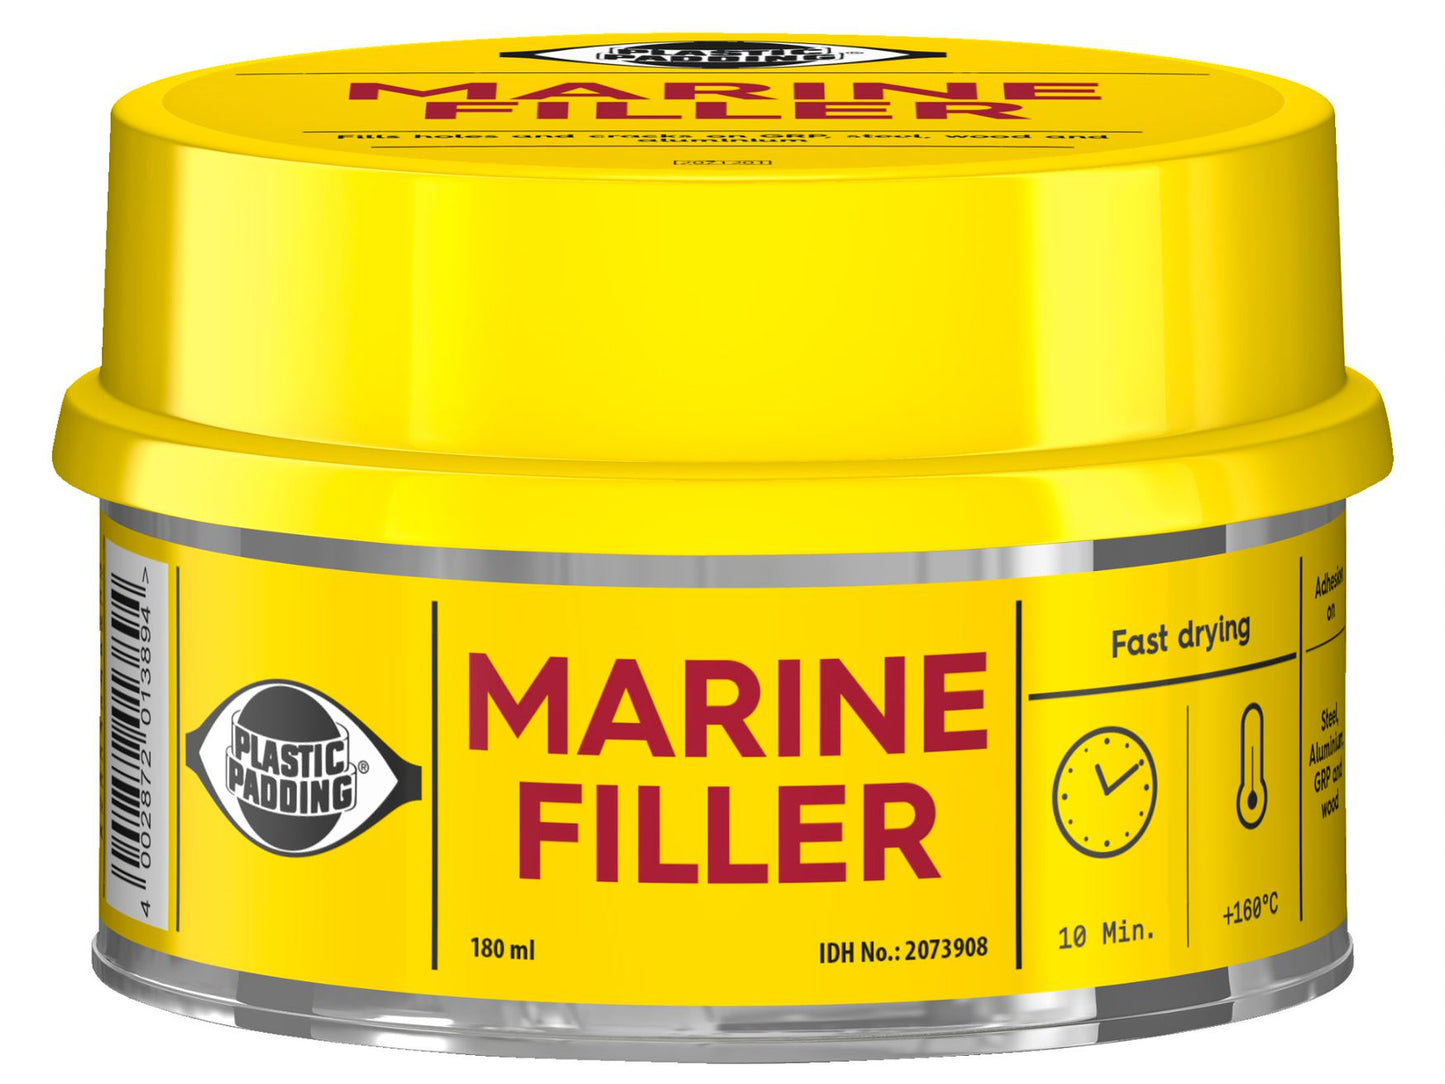 Plastic Padding Marine Filler -180ML Tin